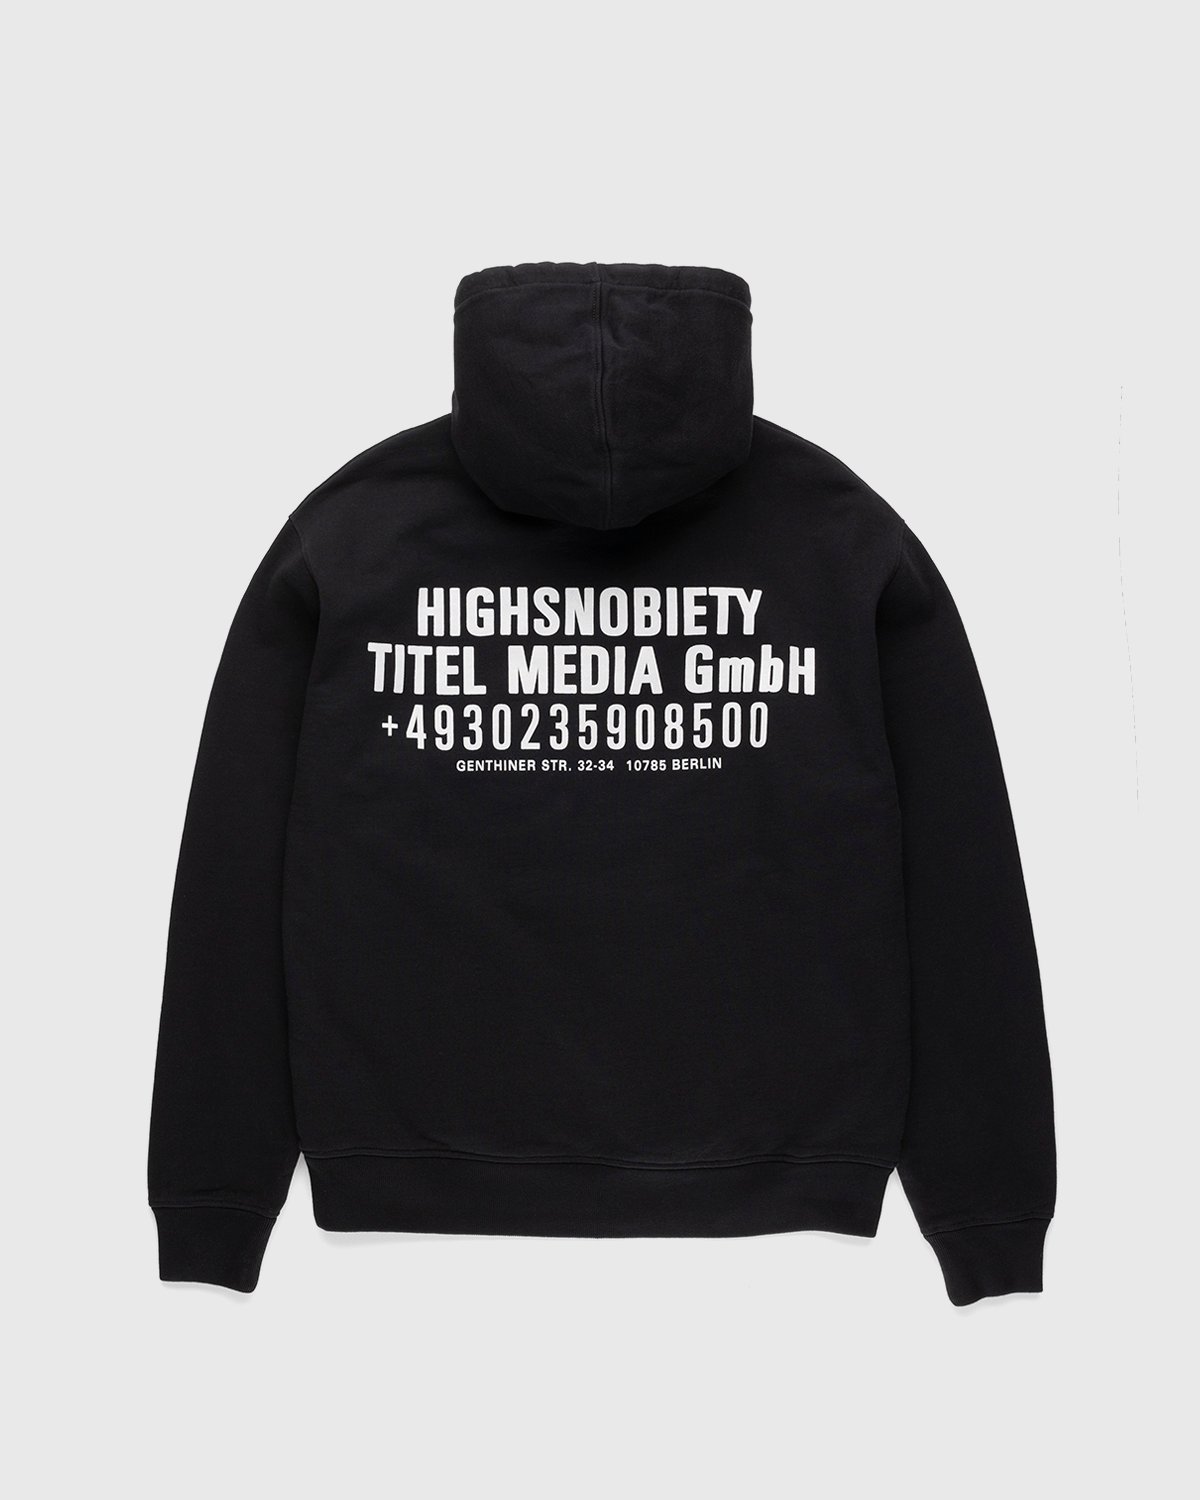 Highsnobiety - Titel Media GmbH Hoodie Black - Clothing - Black - Image 1